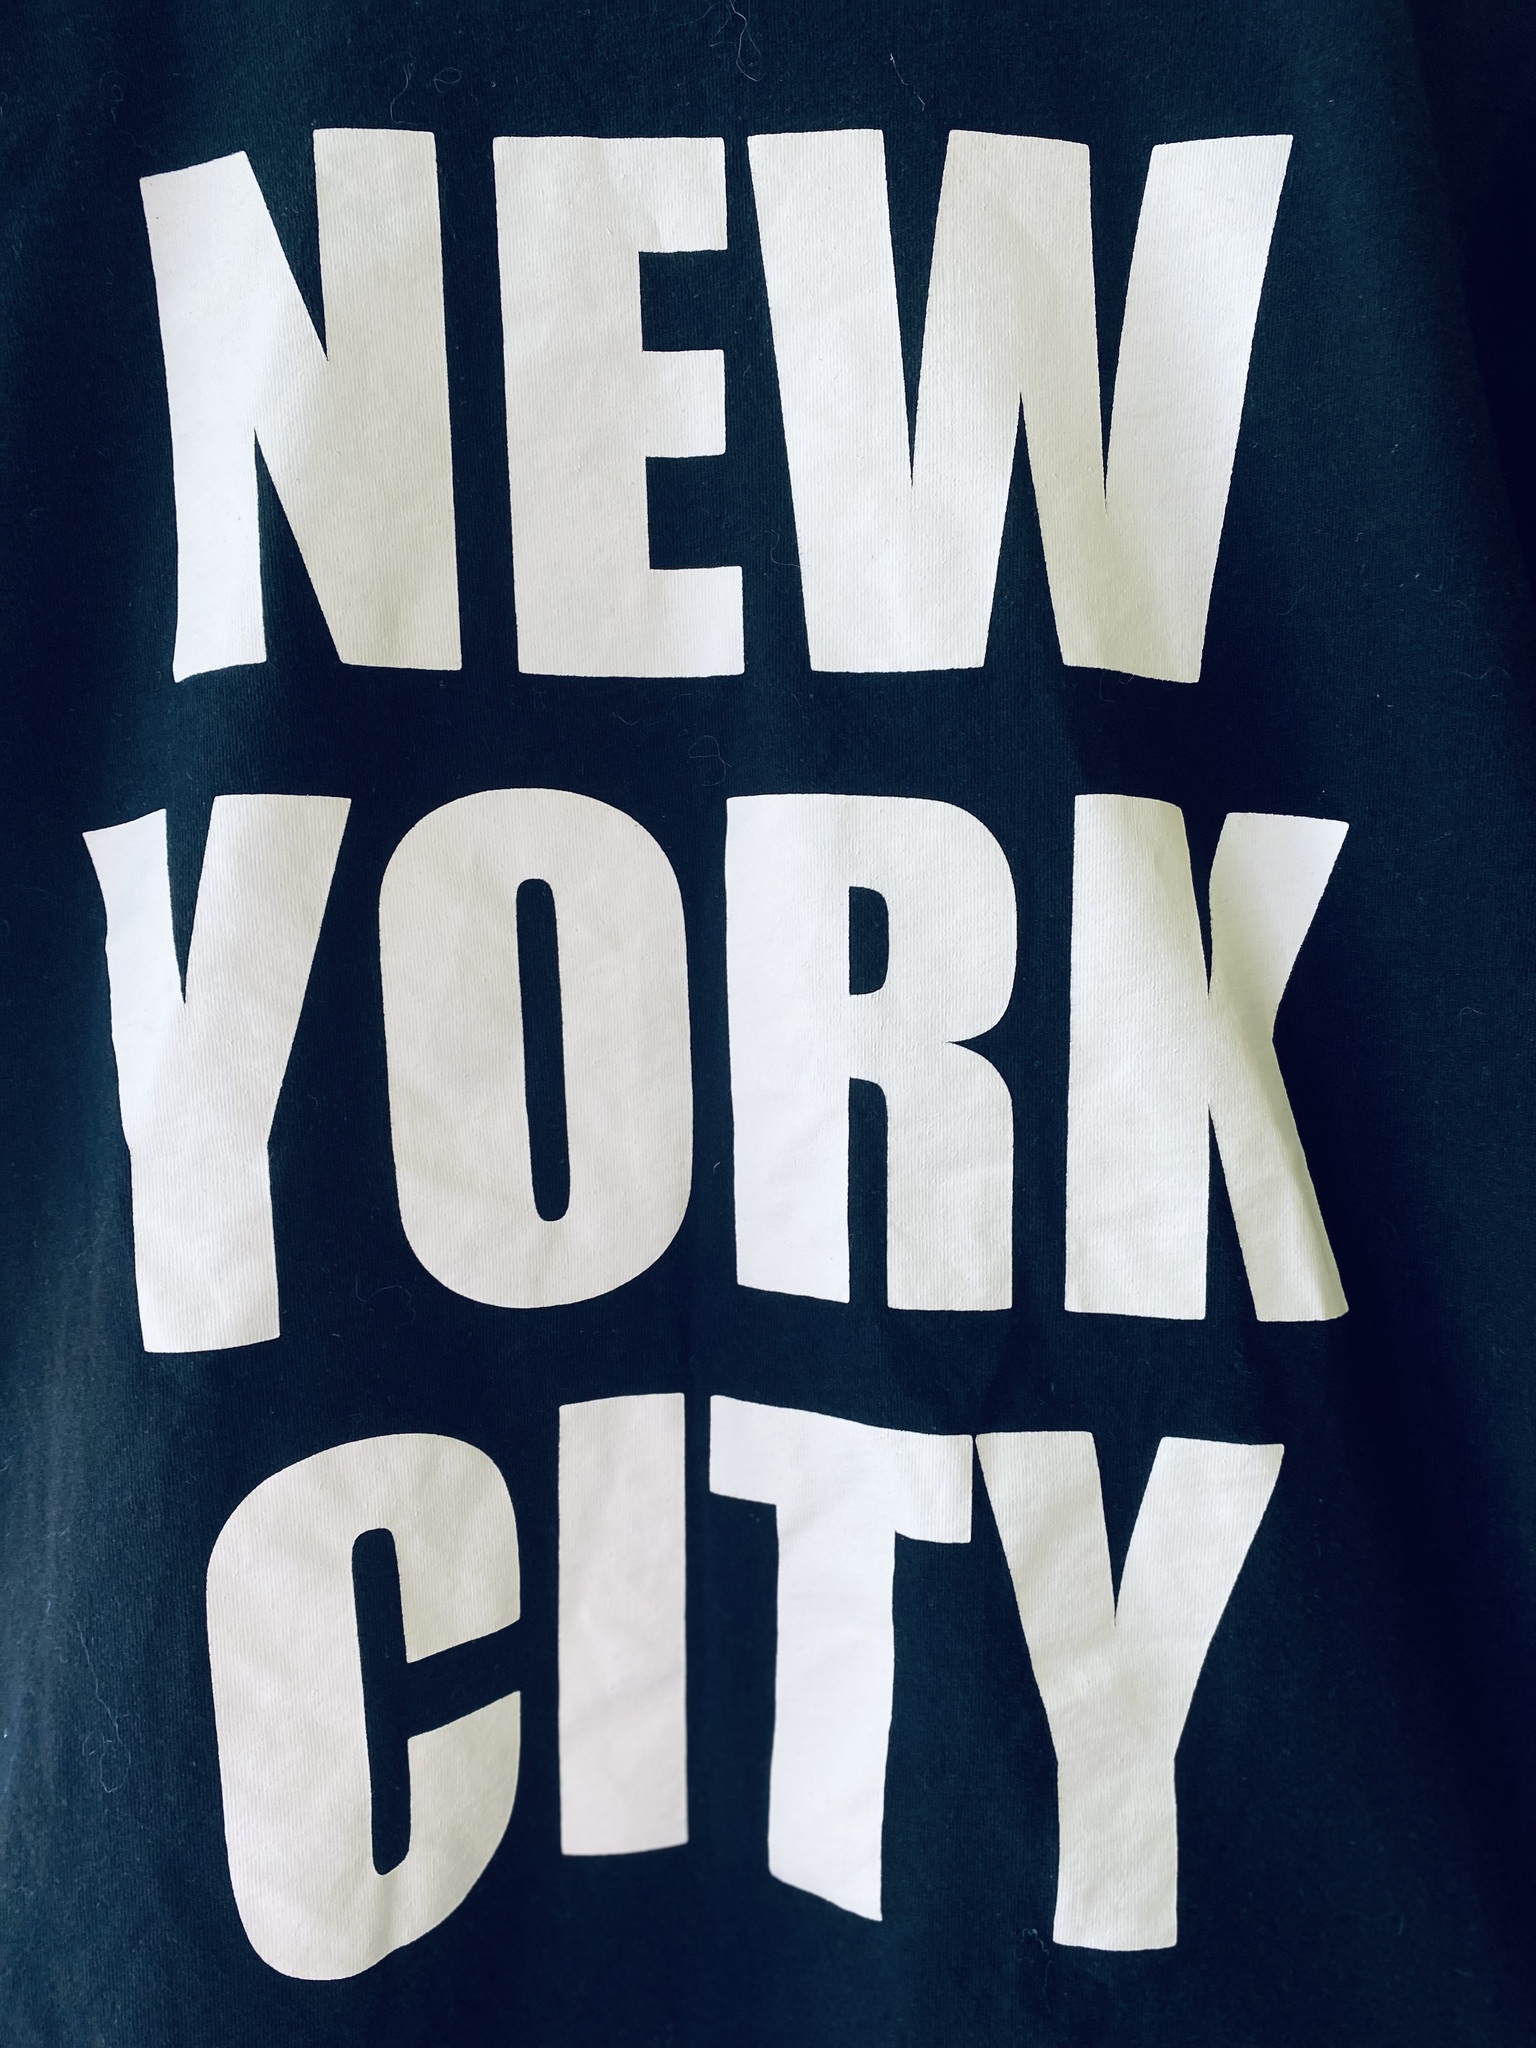 Tisha "New York City"